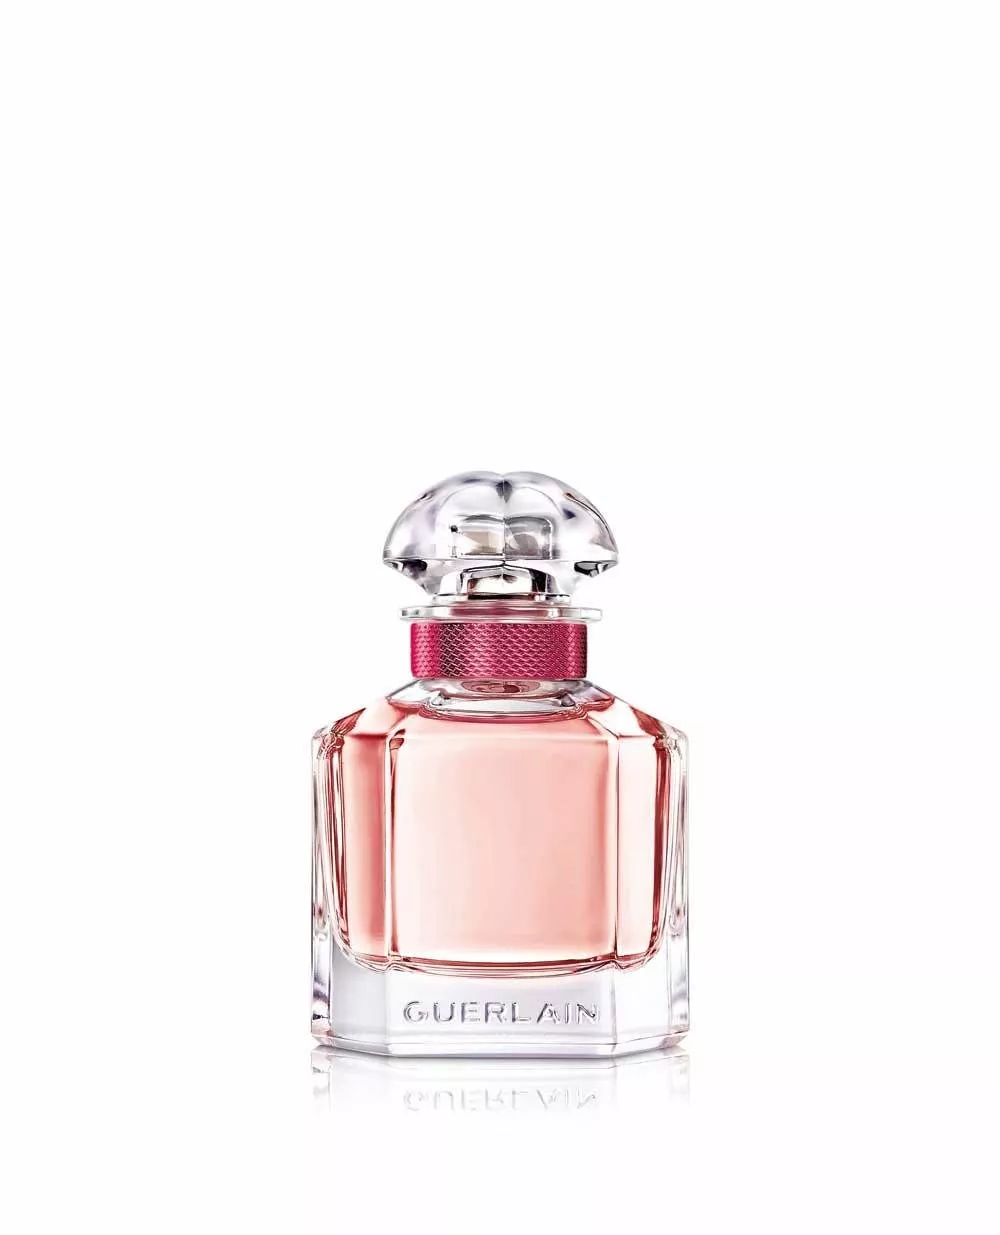 غيرلان تطلق عطر Mon Guerlain Bloom of Rose Eau de Parfum الجديد